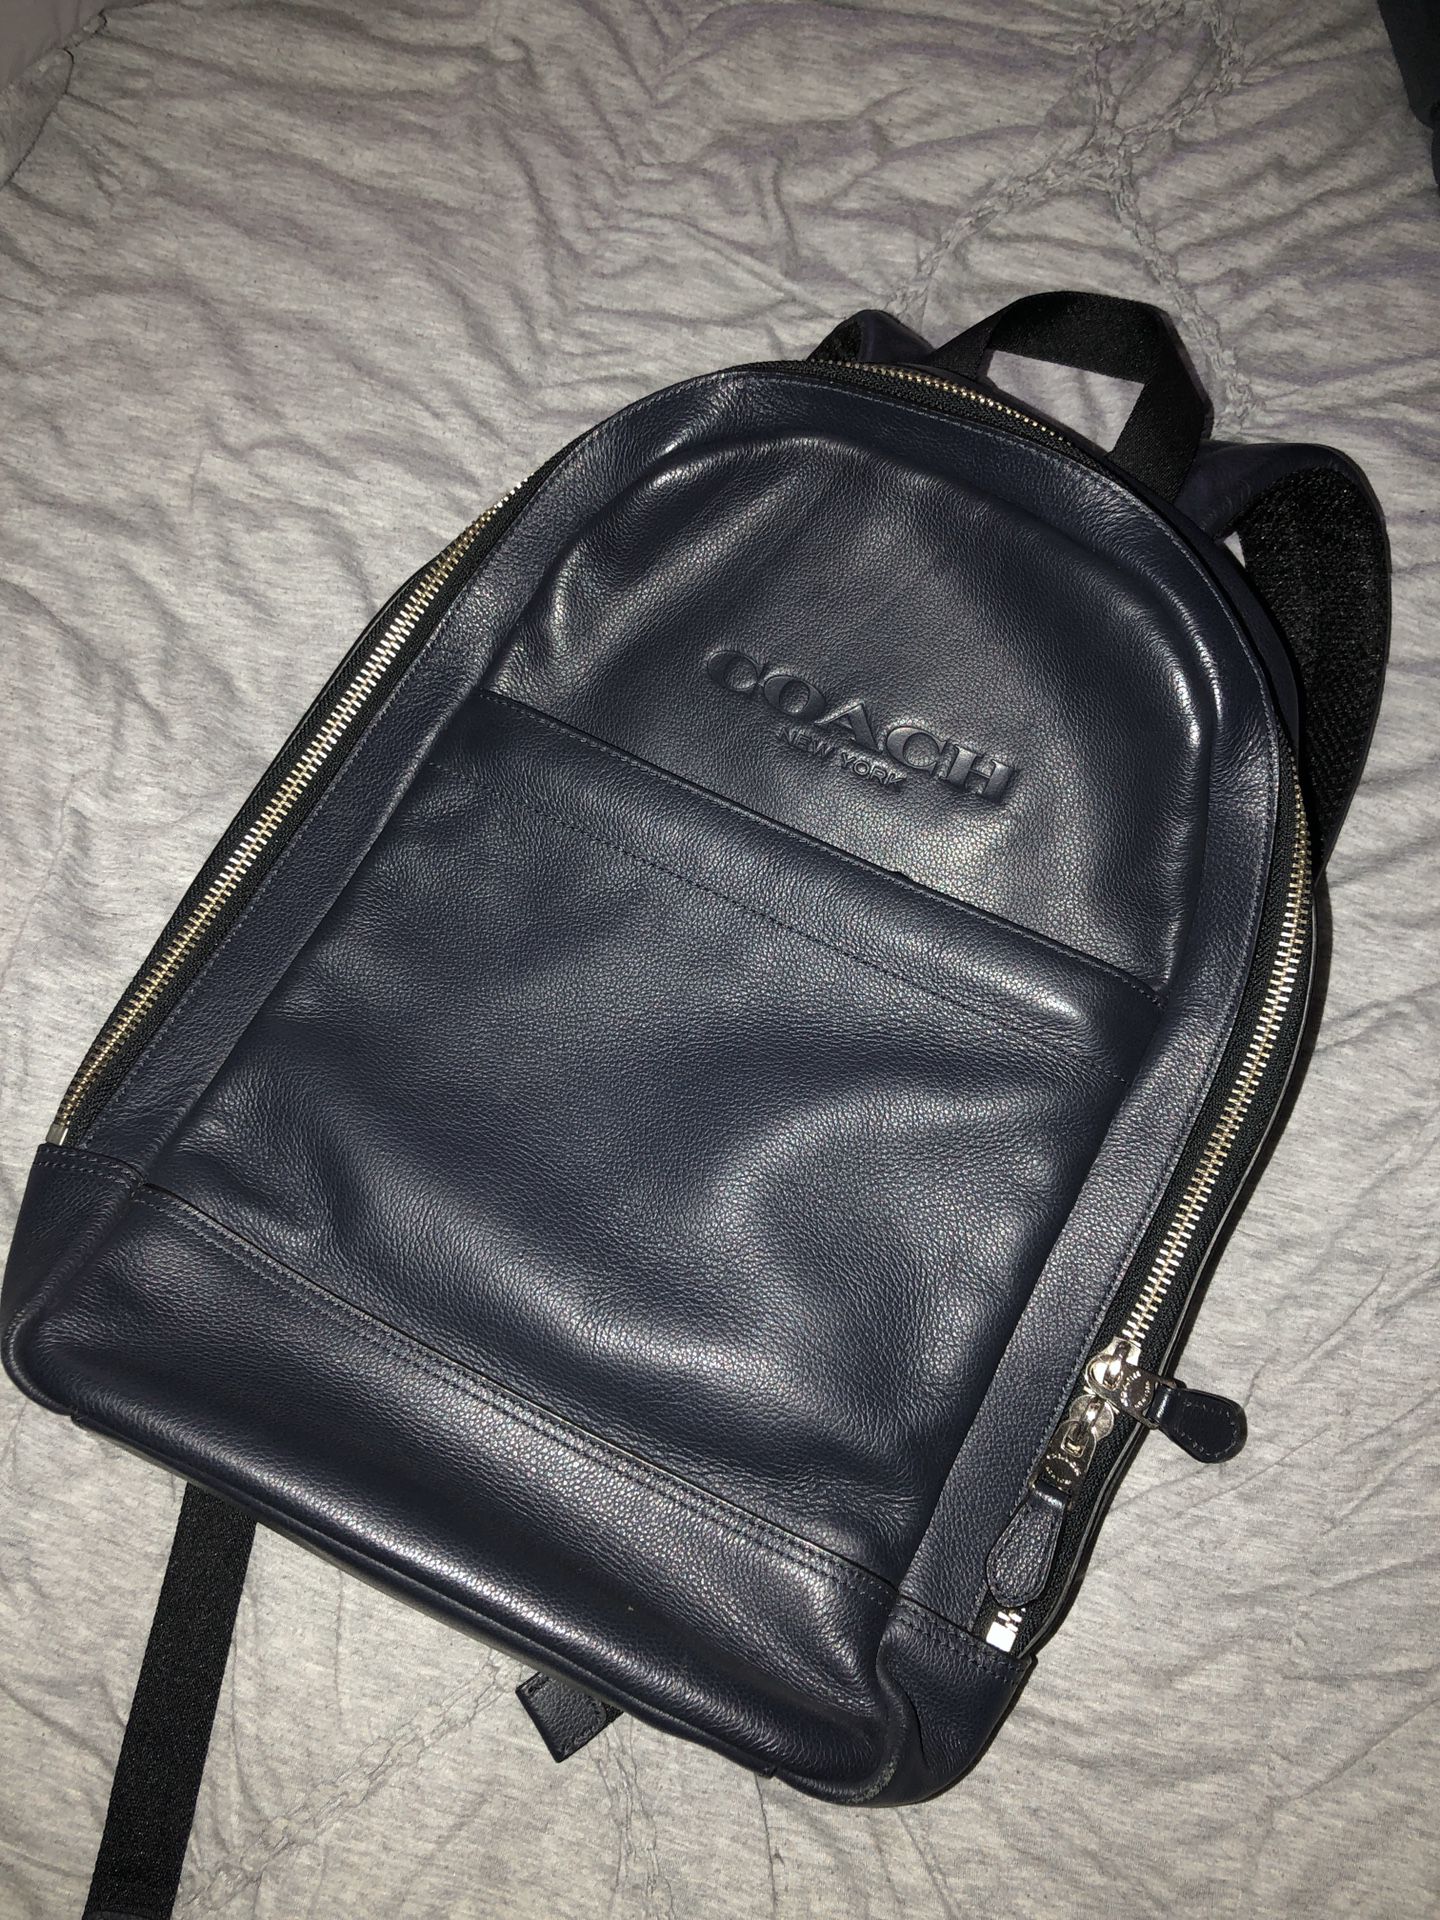 Coach men’s backpack